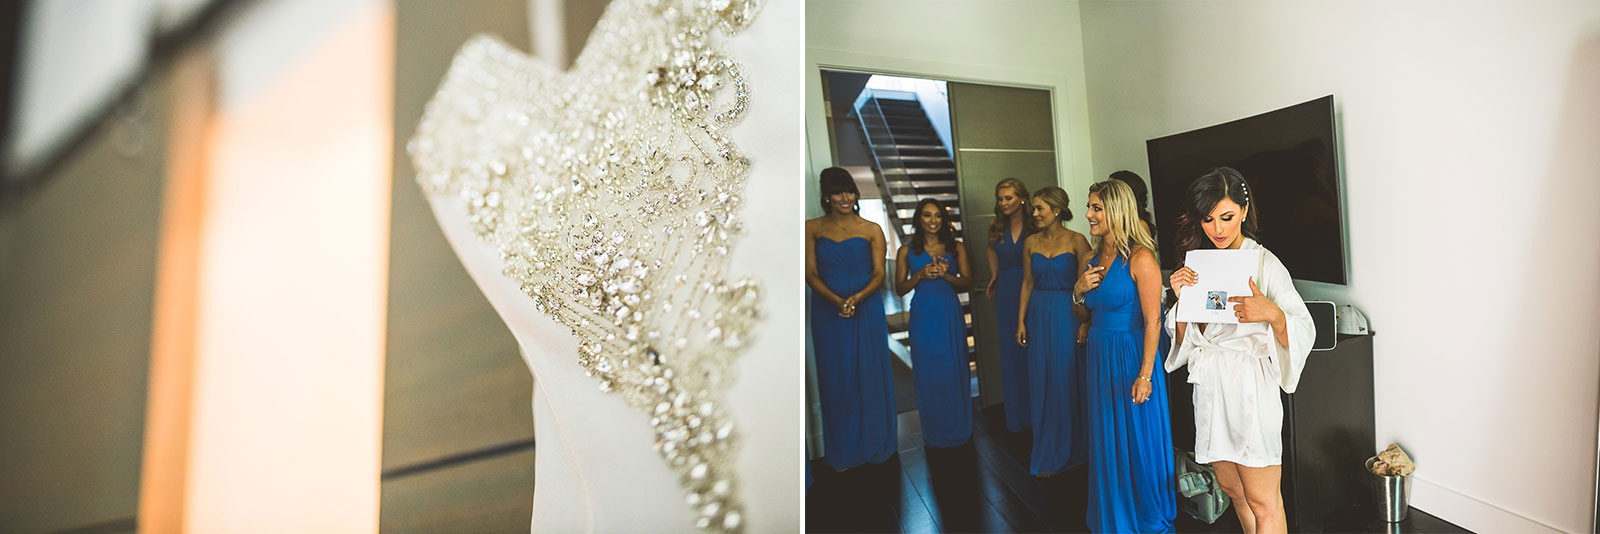 10 1 dress closeup - Marisa + Chris // Chicago Wedding Photos at Navy Pier Crystal Garden